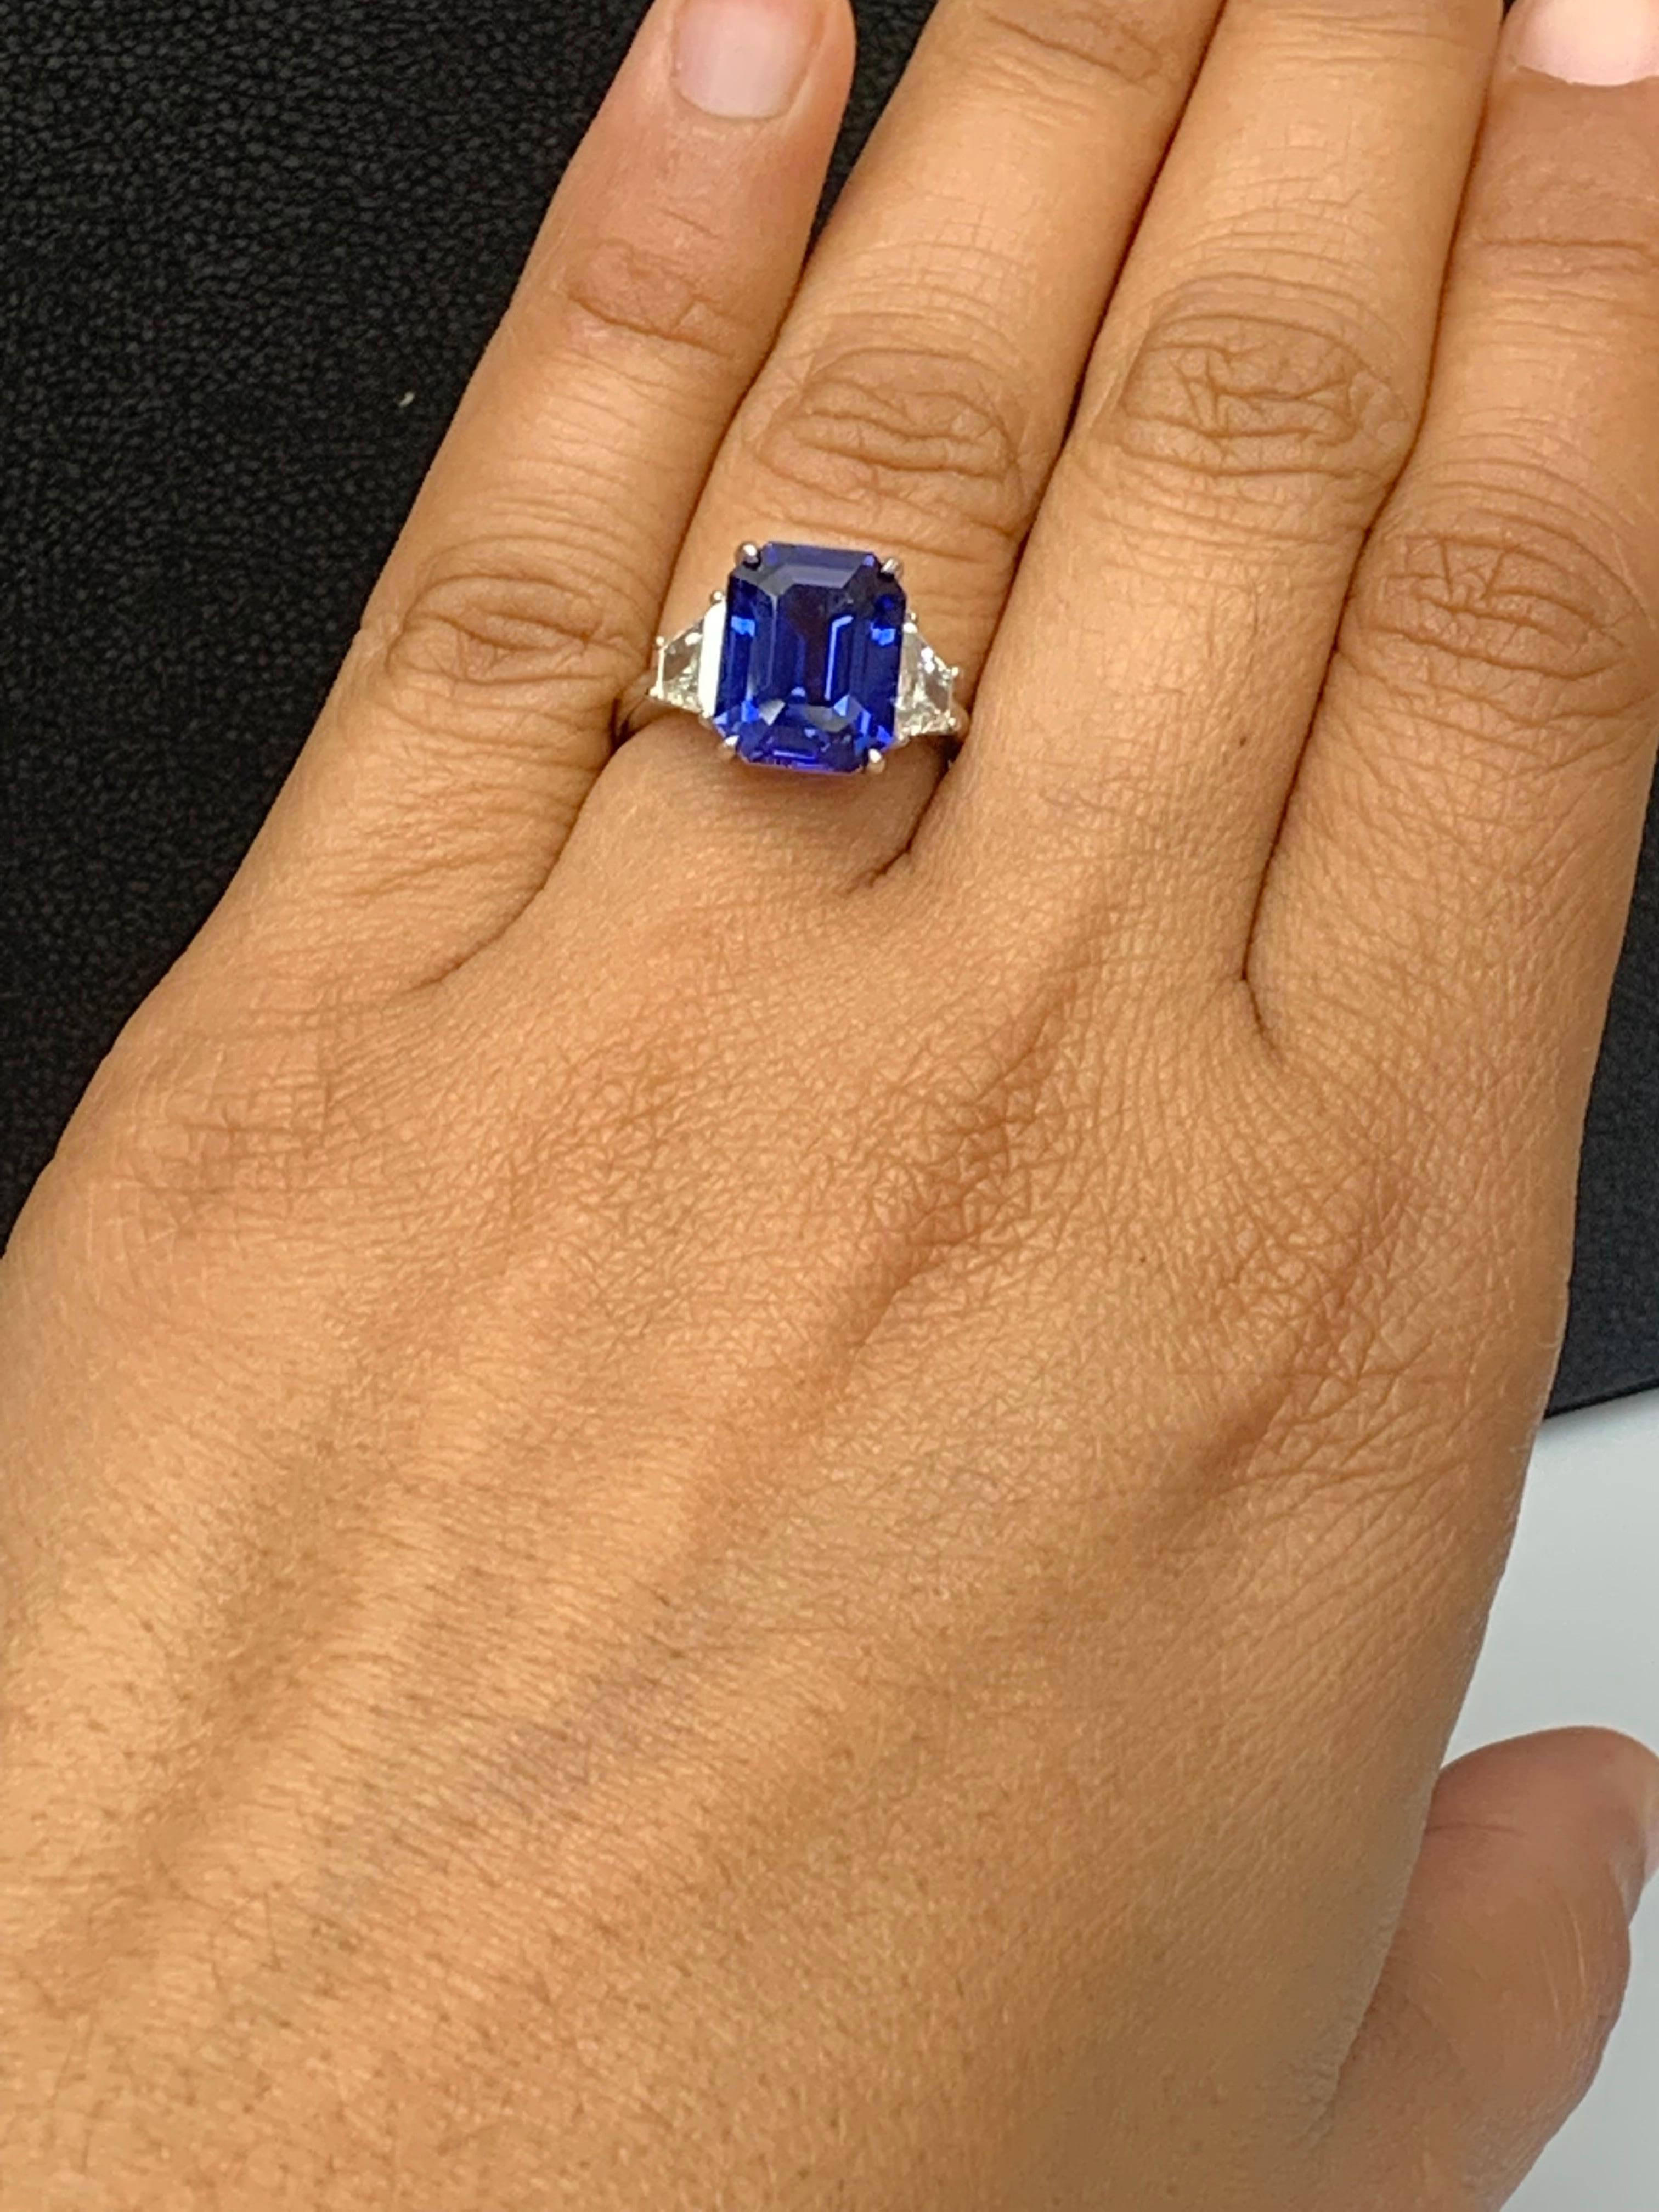 Women's Certified 3.18 Carat Emerald Cut Sapphire & Diamond Engagement Ring in Platinum For Sale